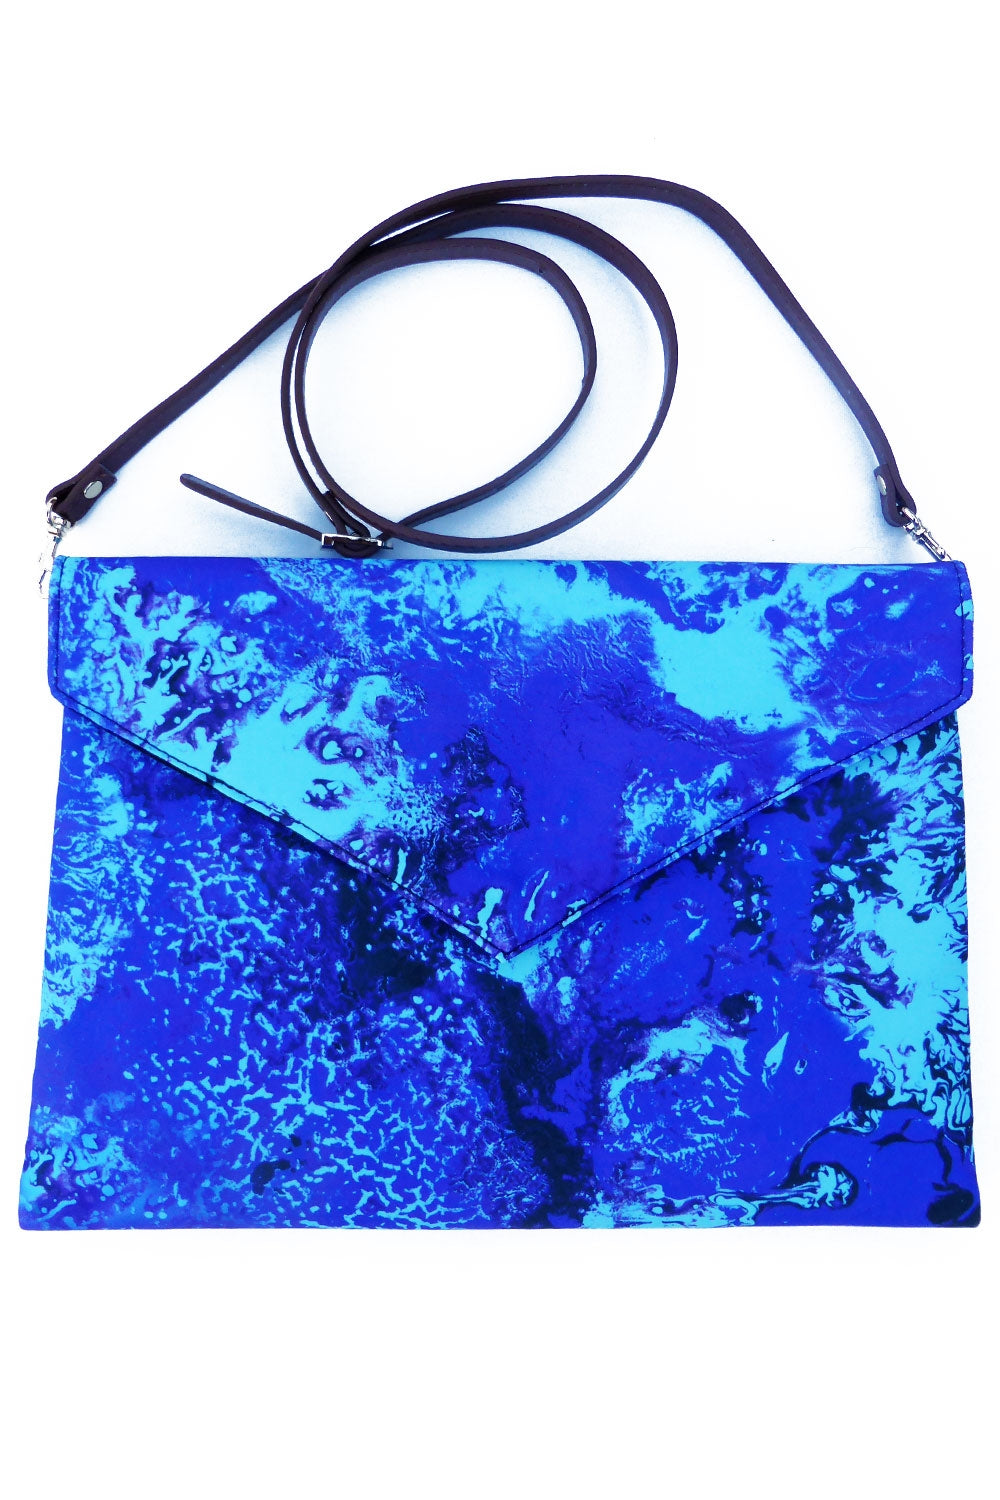 Handbag with an abstract blue and purple print